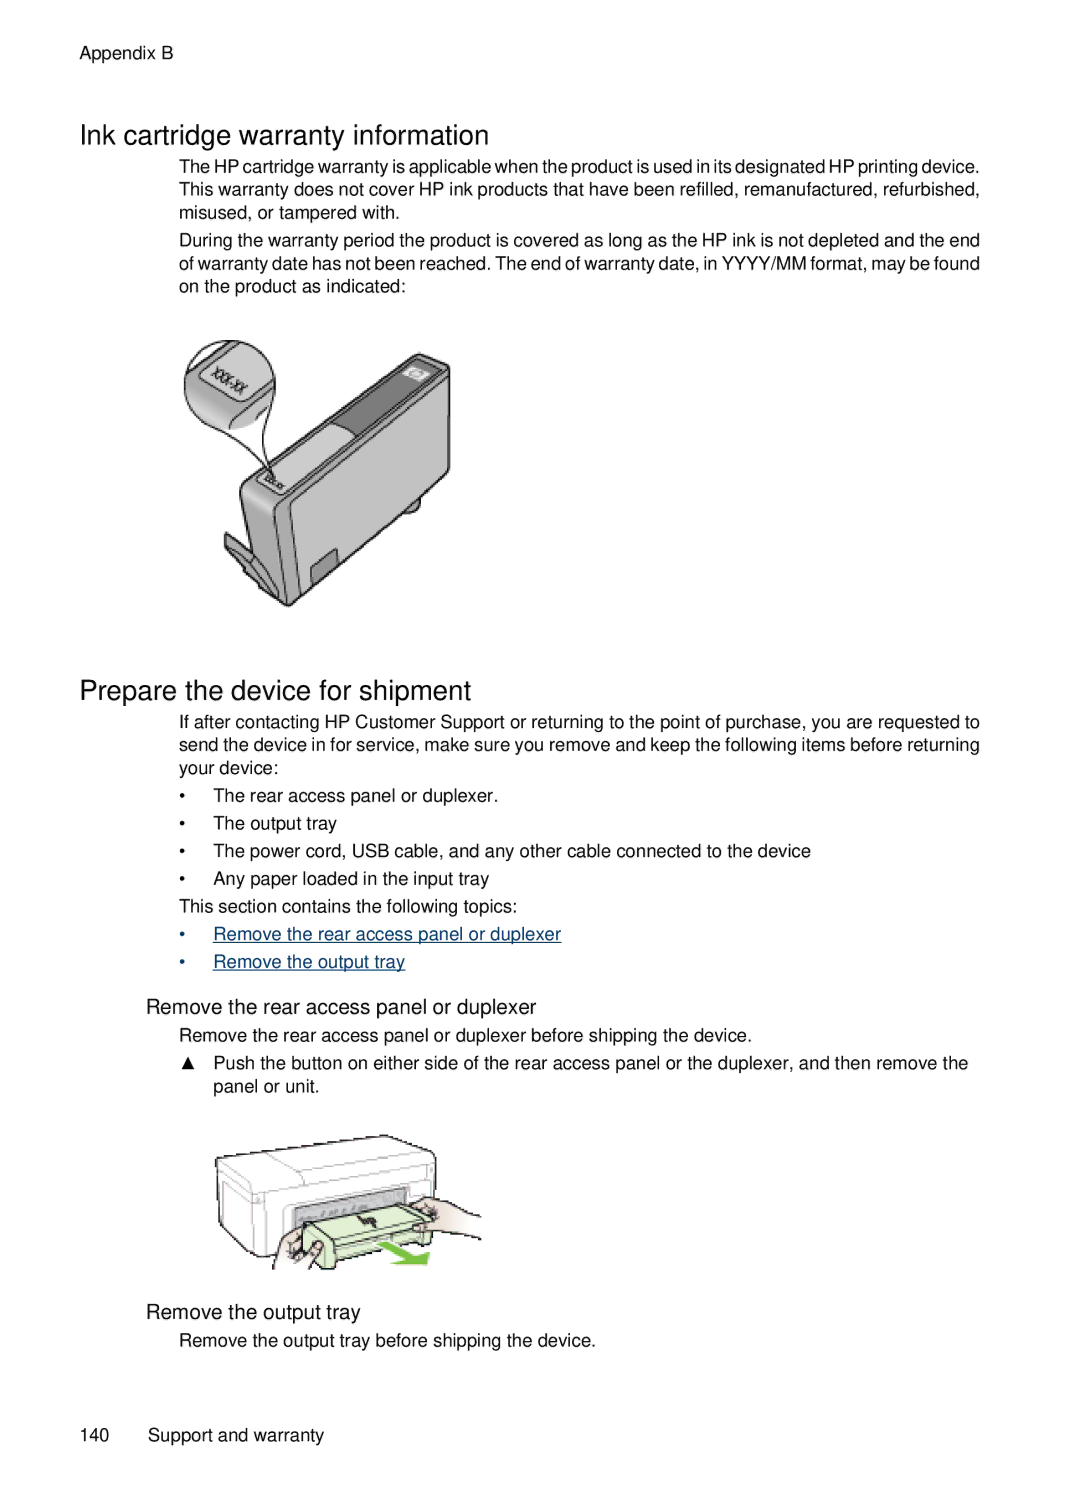 Hitachi E609 Ink cartridge warranty information, Prepare the device for shipment, Remove the rear access panel or duplexer 